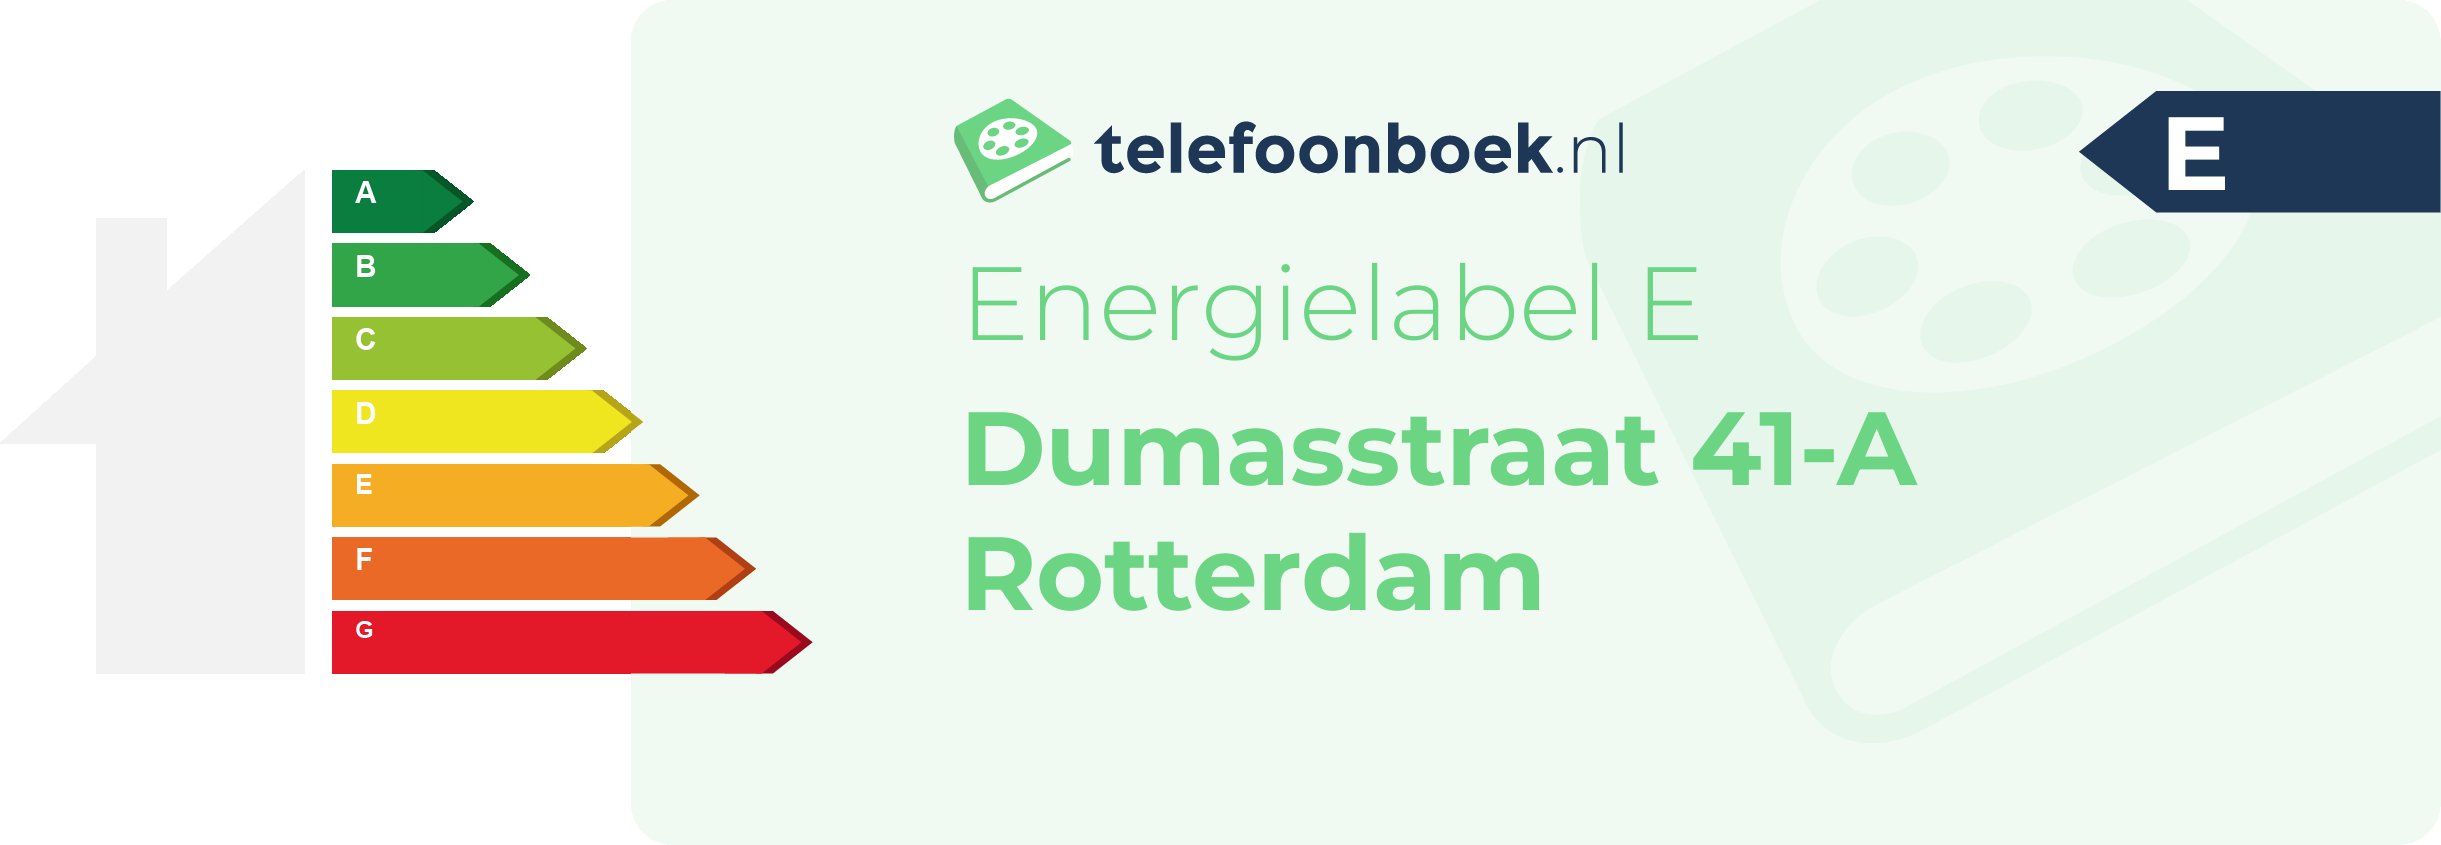 Energielabel Dumasstraat 41-A Rotterdam